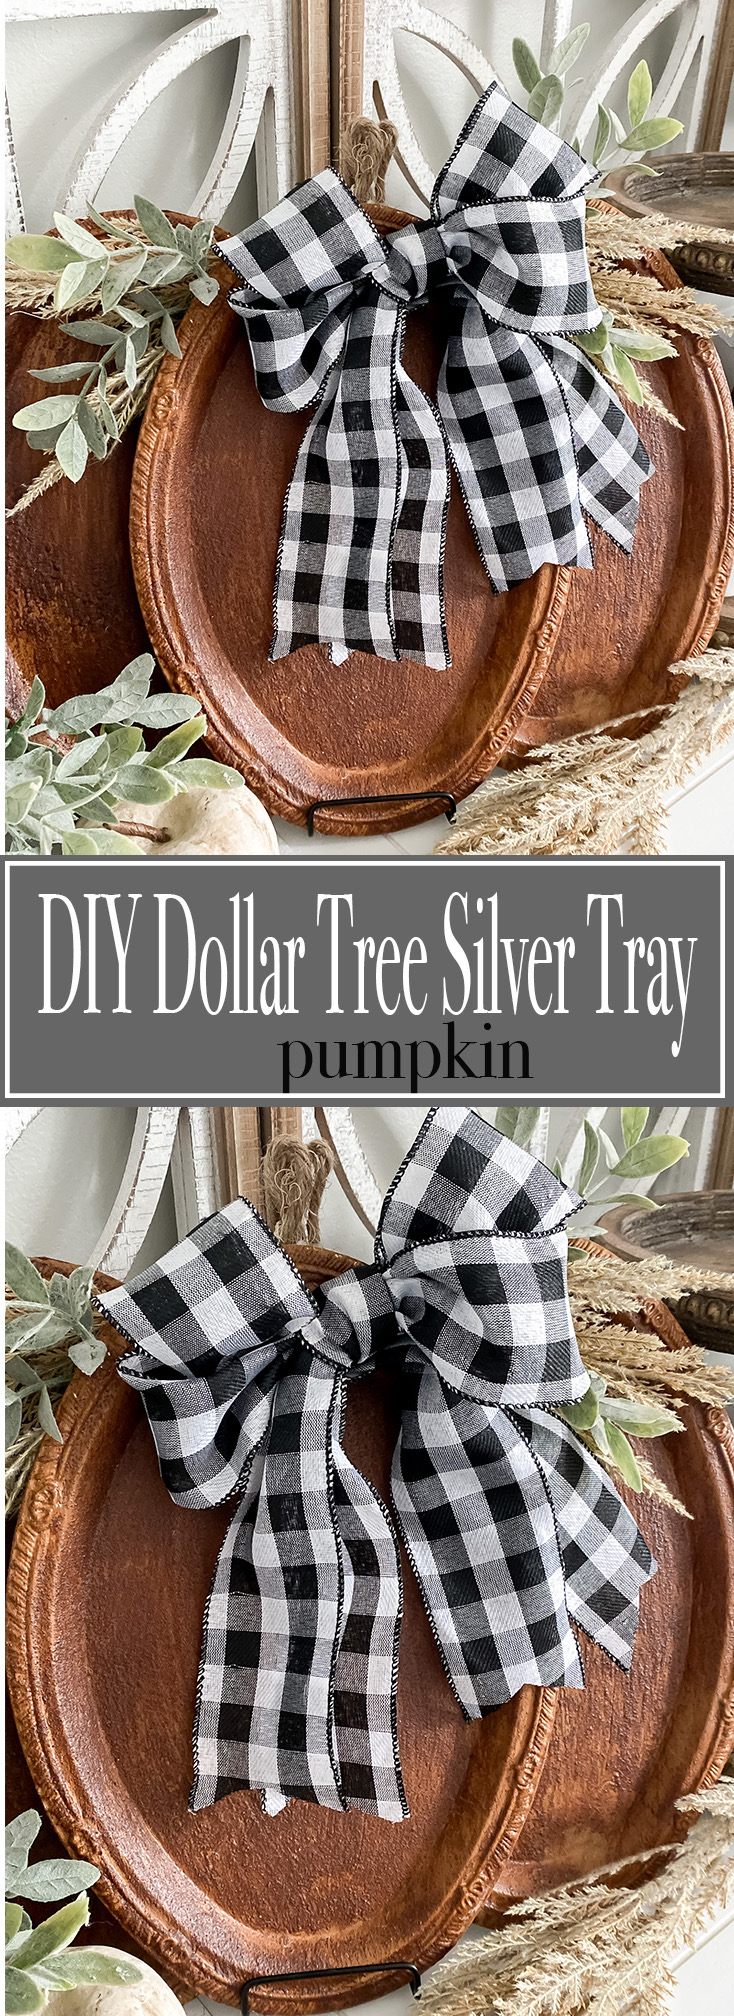 DIY DOLLAR TREE SILVER TRAY PUMPKIN